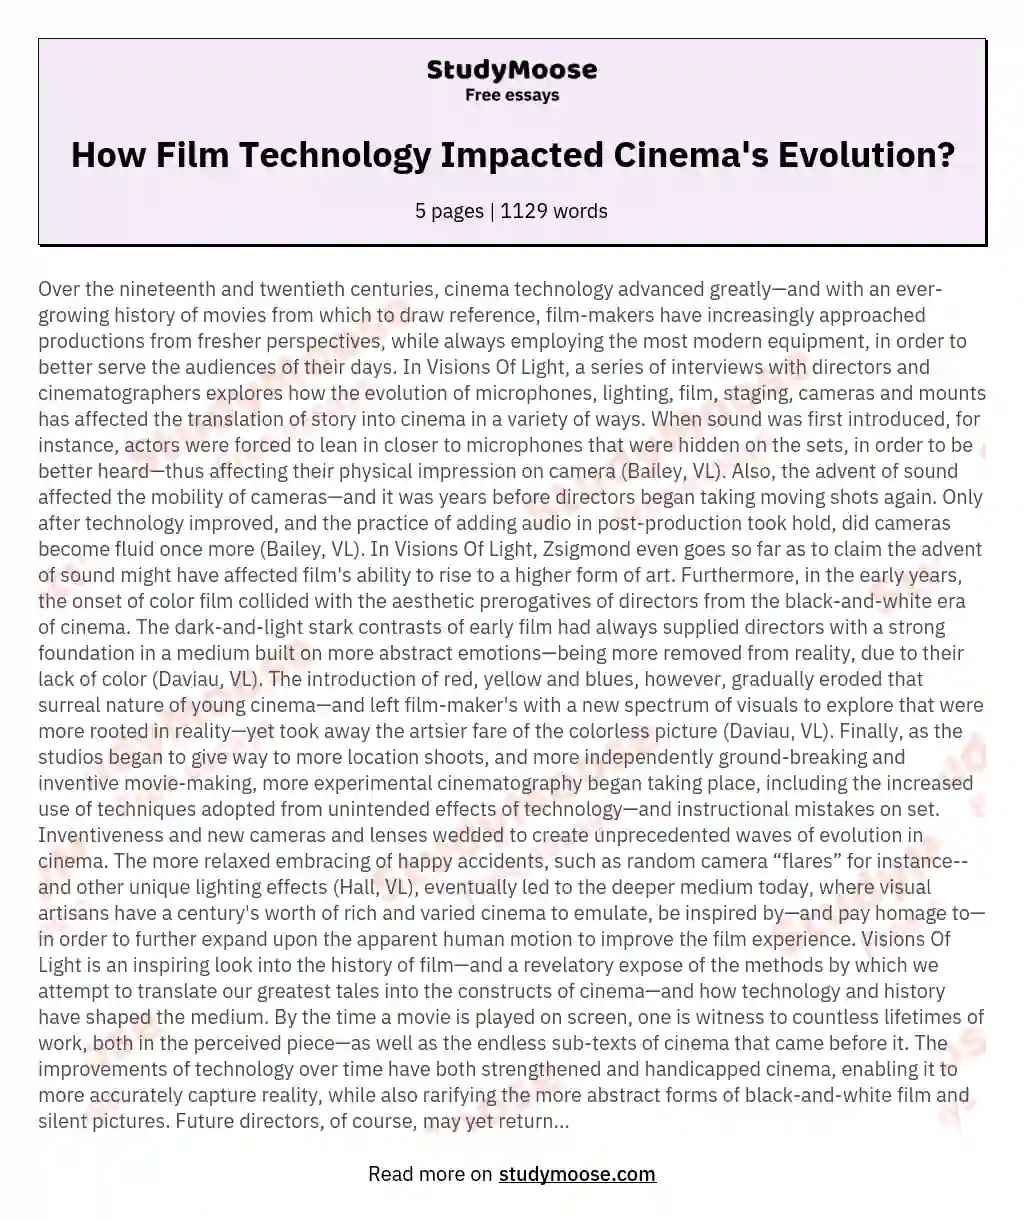 How Film Technology Impacted Cinema's Evolution? essay